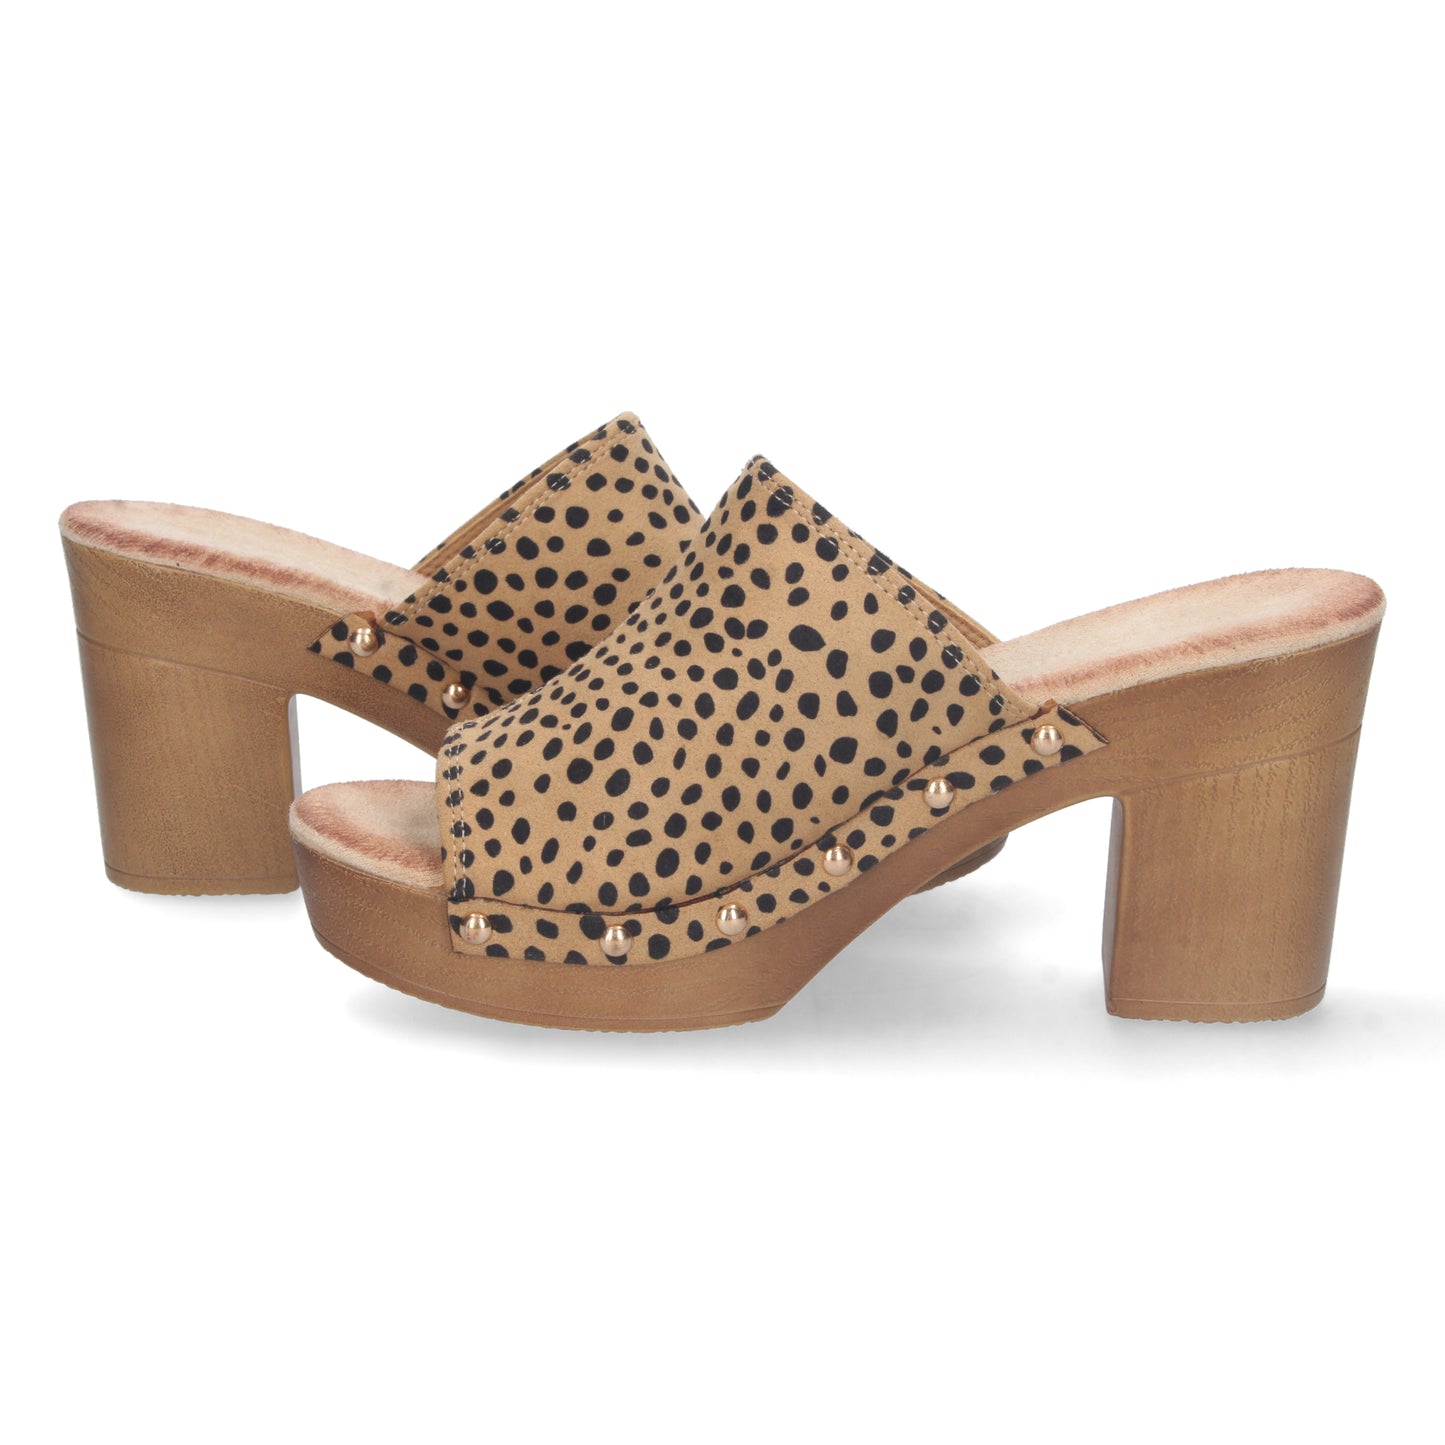 Sandalia de tacón de madera leopardo